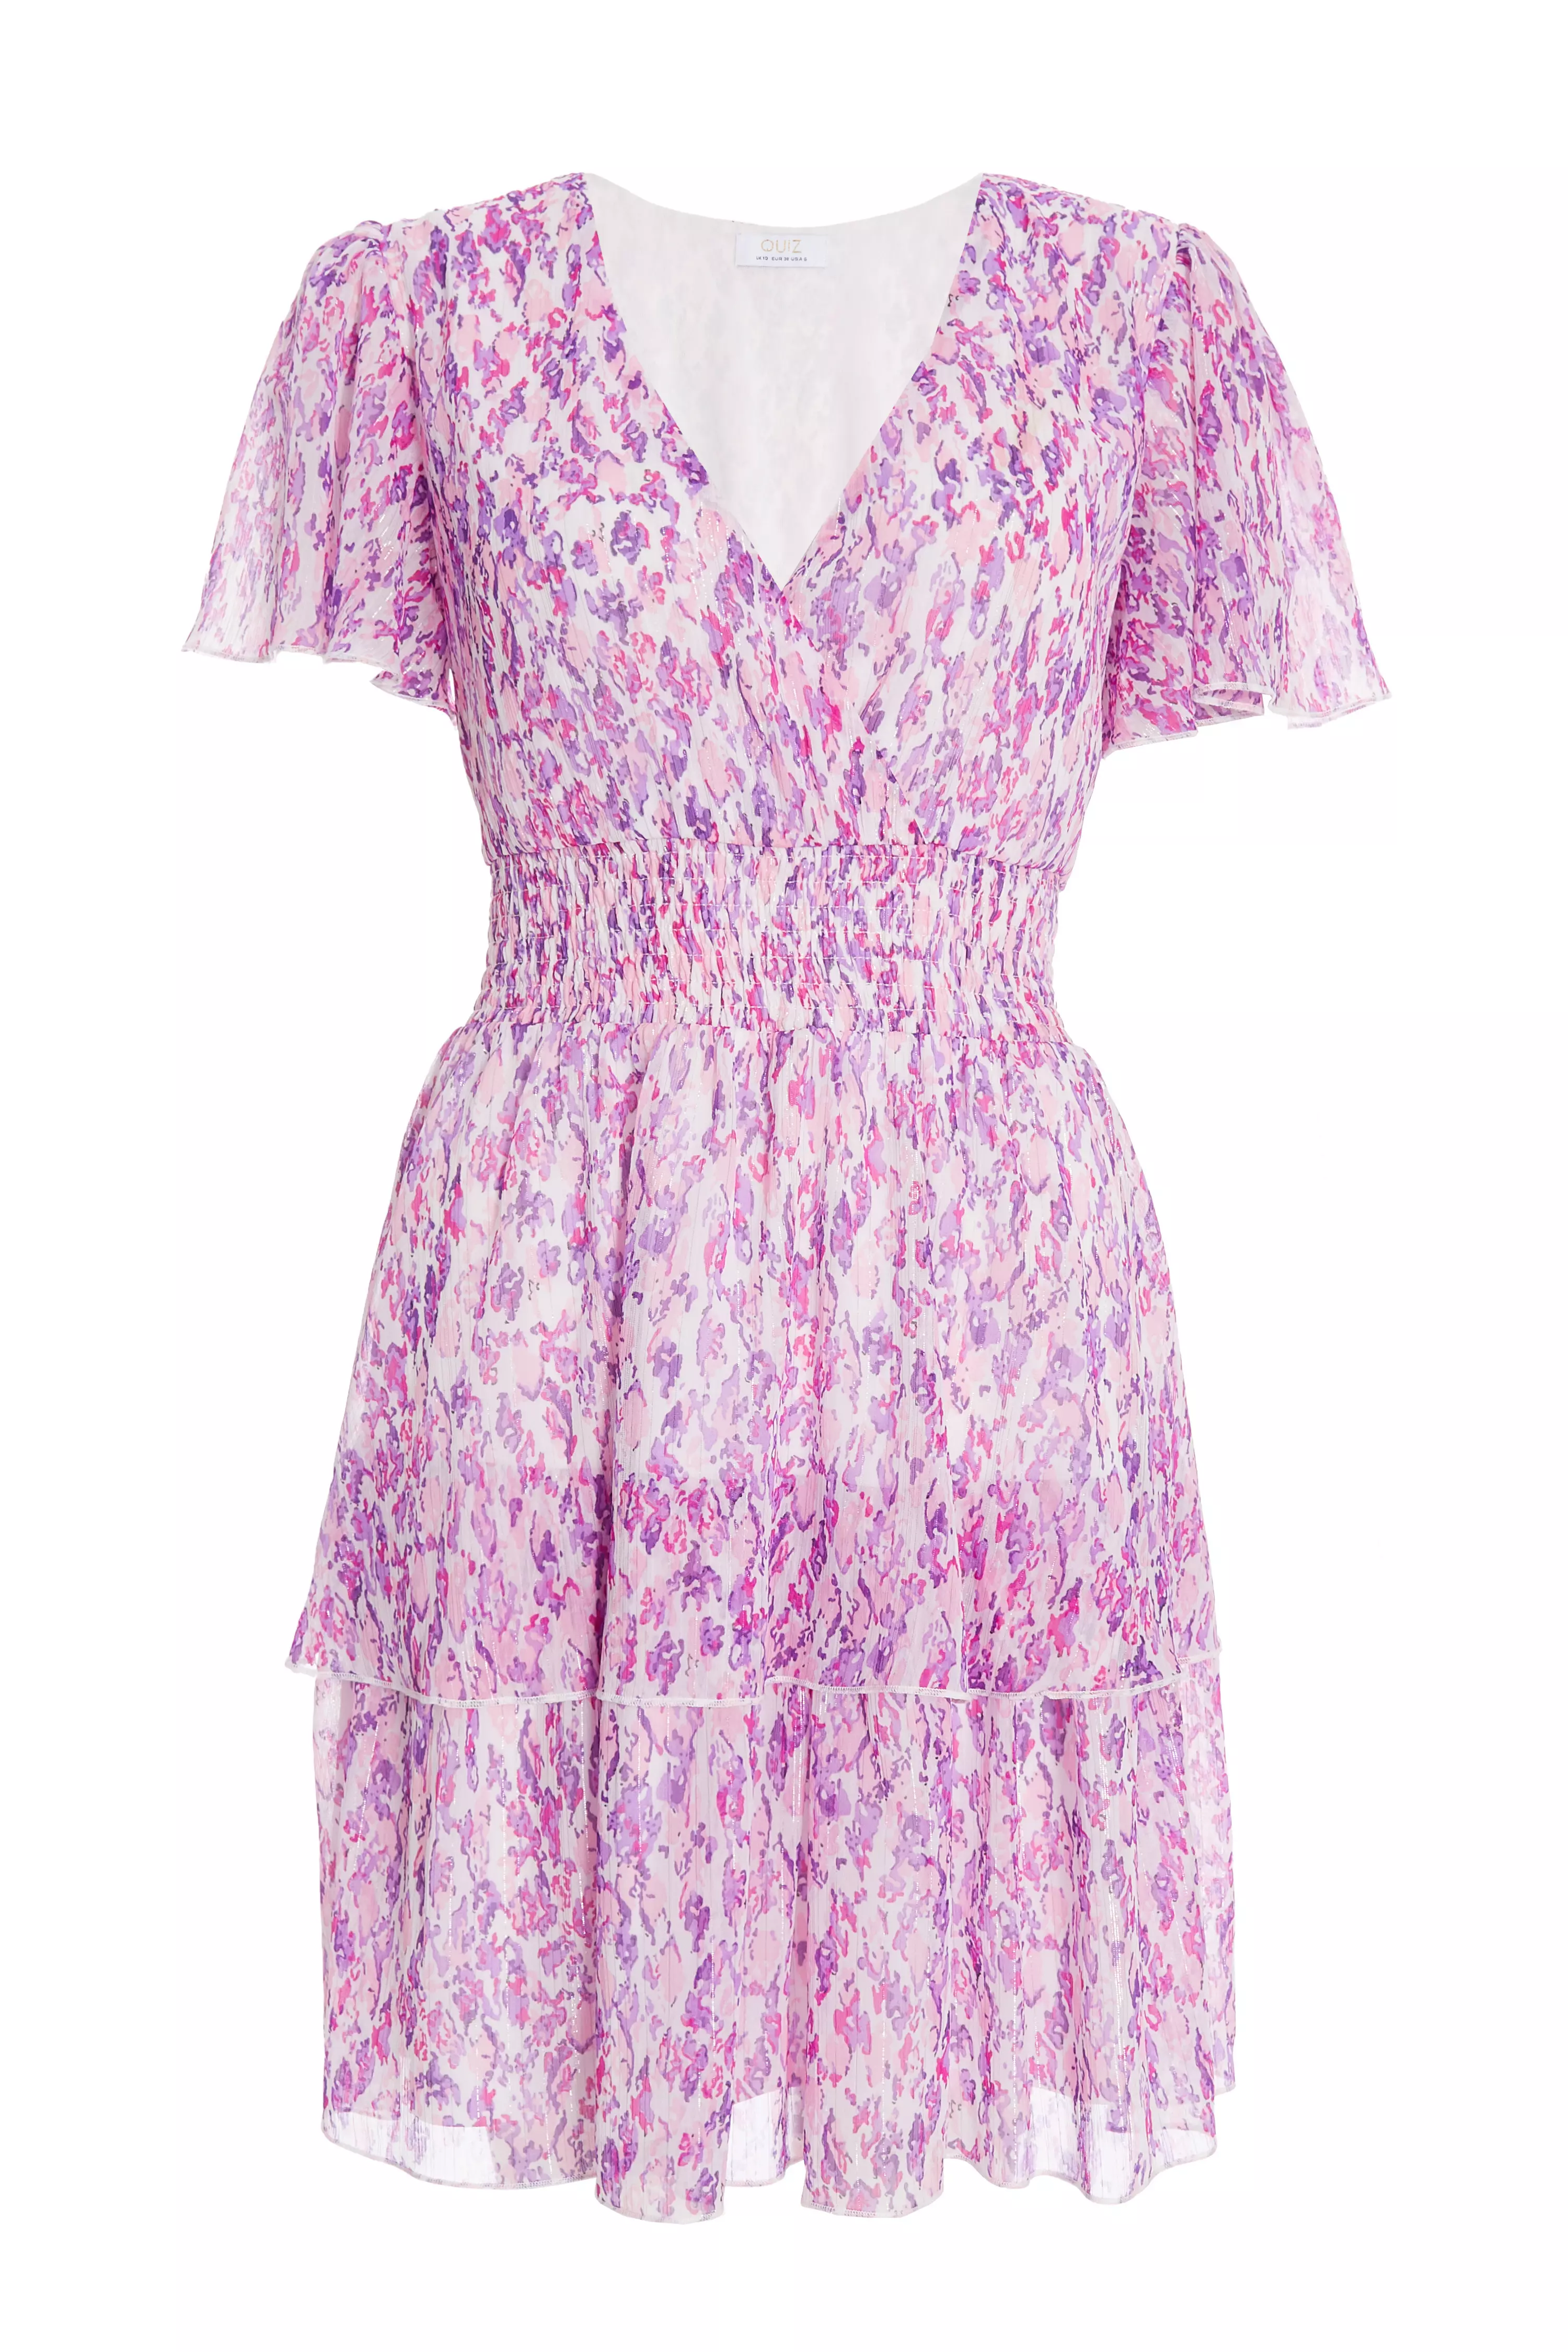 Lilac Chiffon Animal Print Mini Dress - QUIZ Clothing